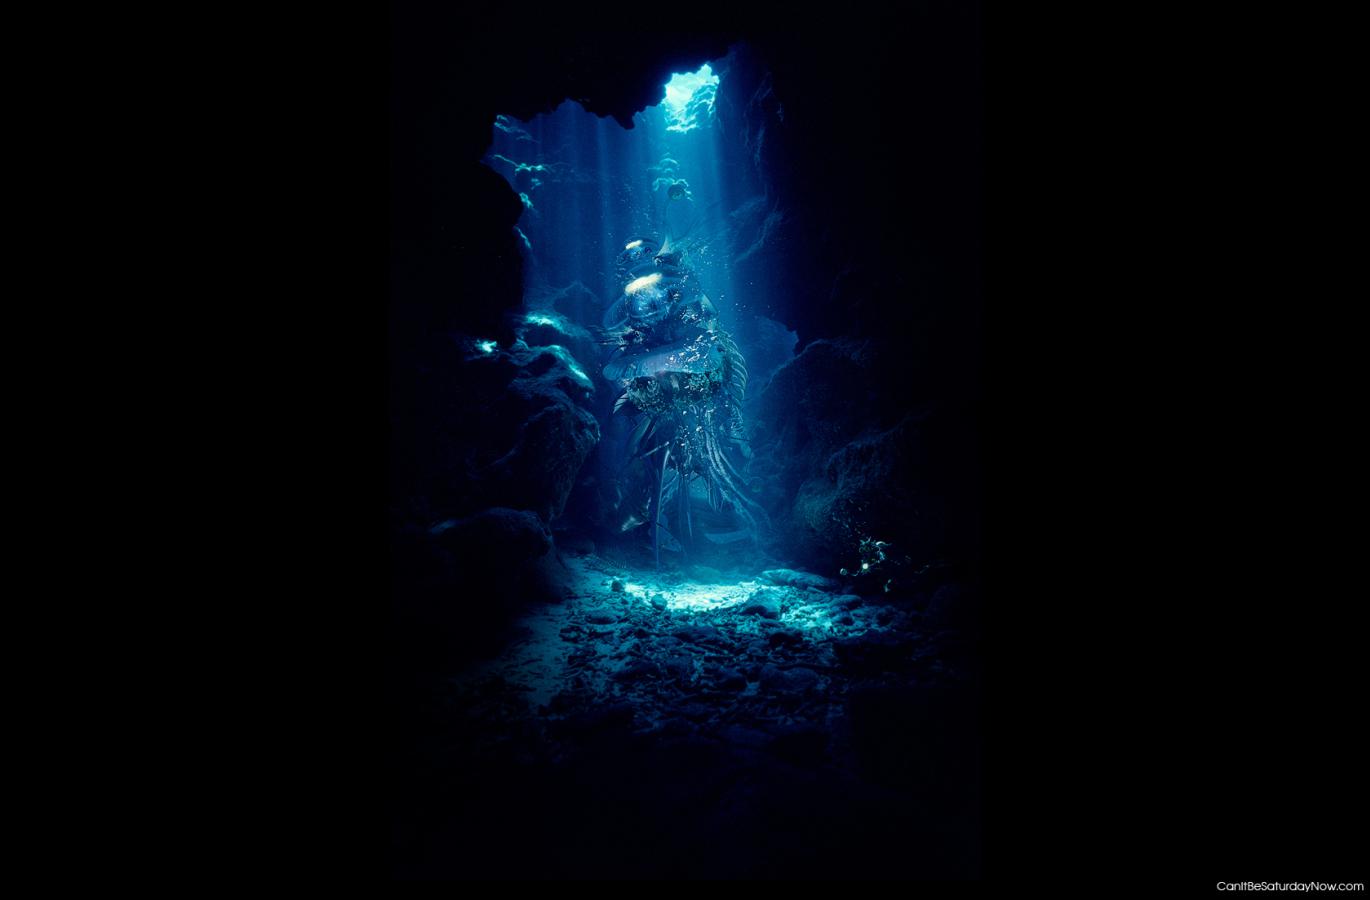 Underwater thing - Something cool underwater